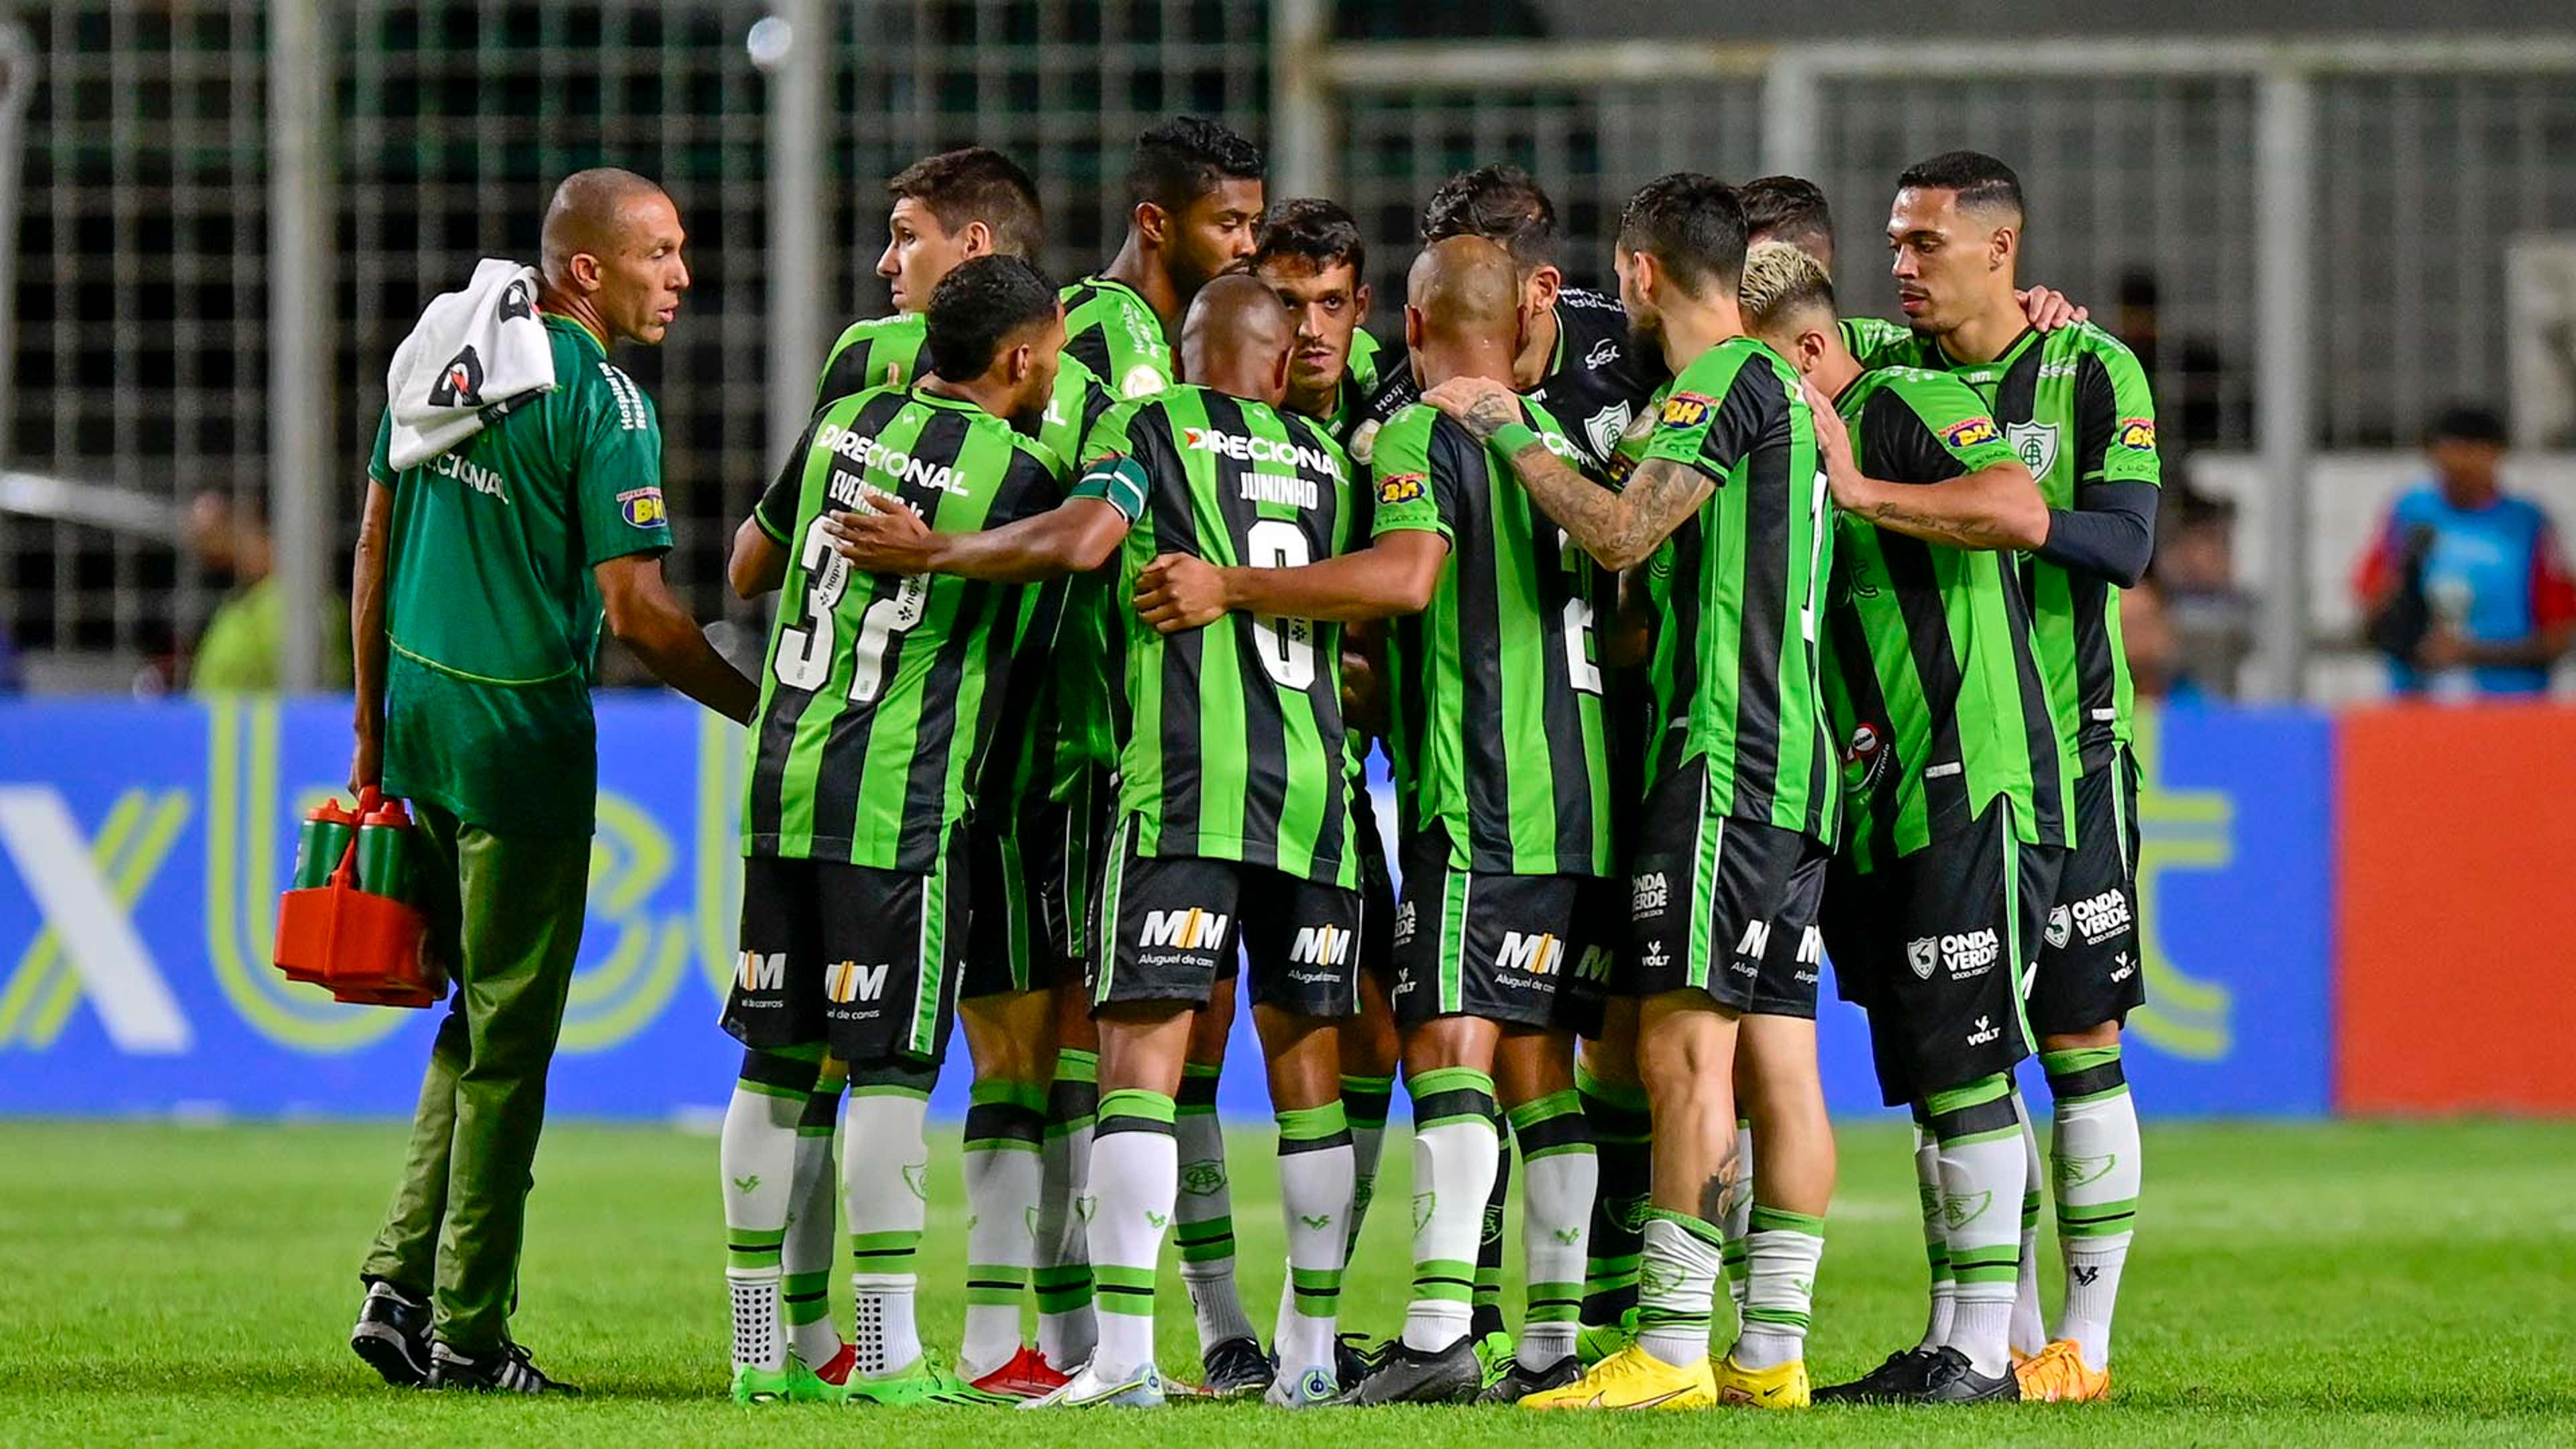 Tombense vs Atlético-GO: A Clash of Two Strong Brazilian Football Clubs